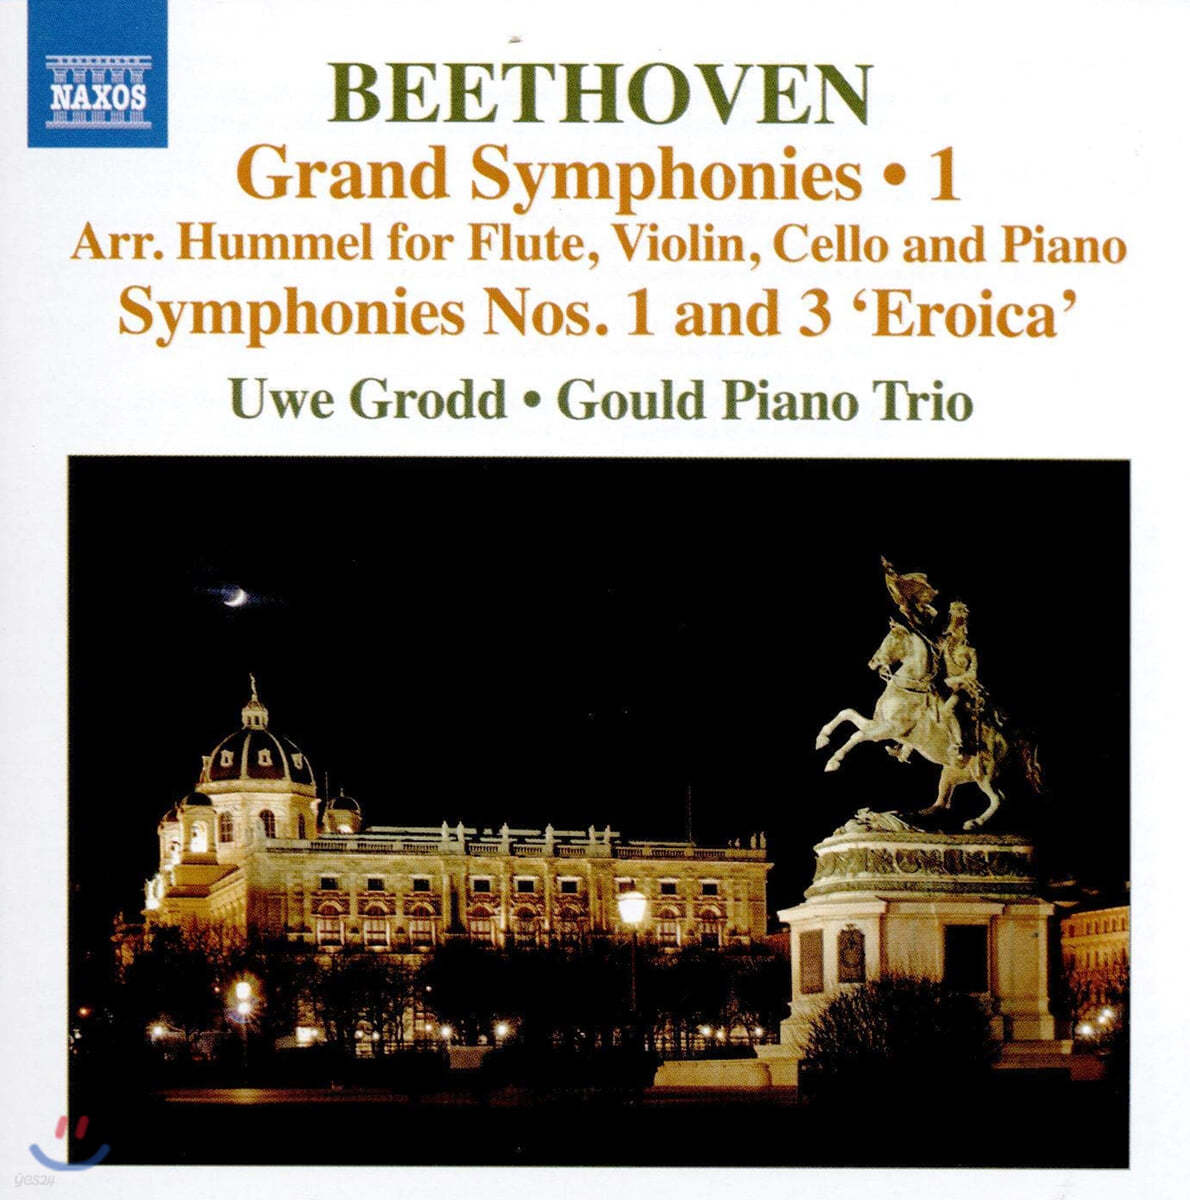 Uwe Grodd 베토벤 : 교향곡 1, 3번 훔멜 편곡 실내악 버전 (Beethoven: Grand Symphonies Vol. 1)